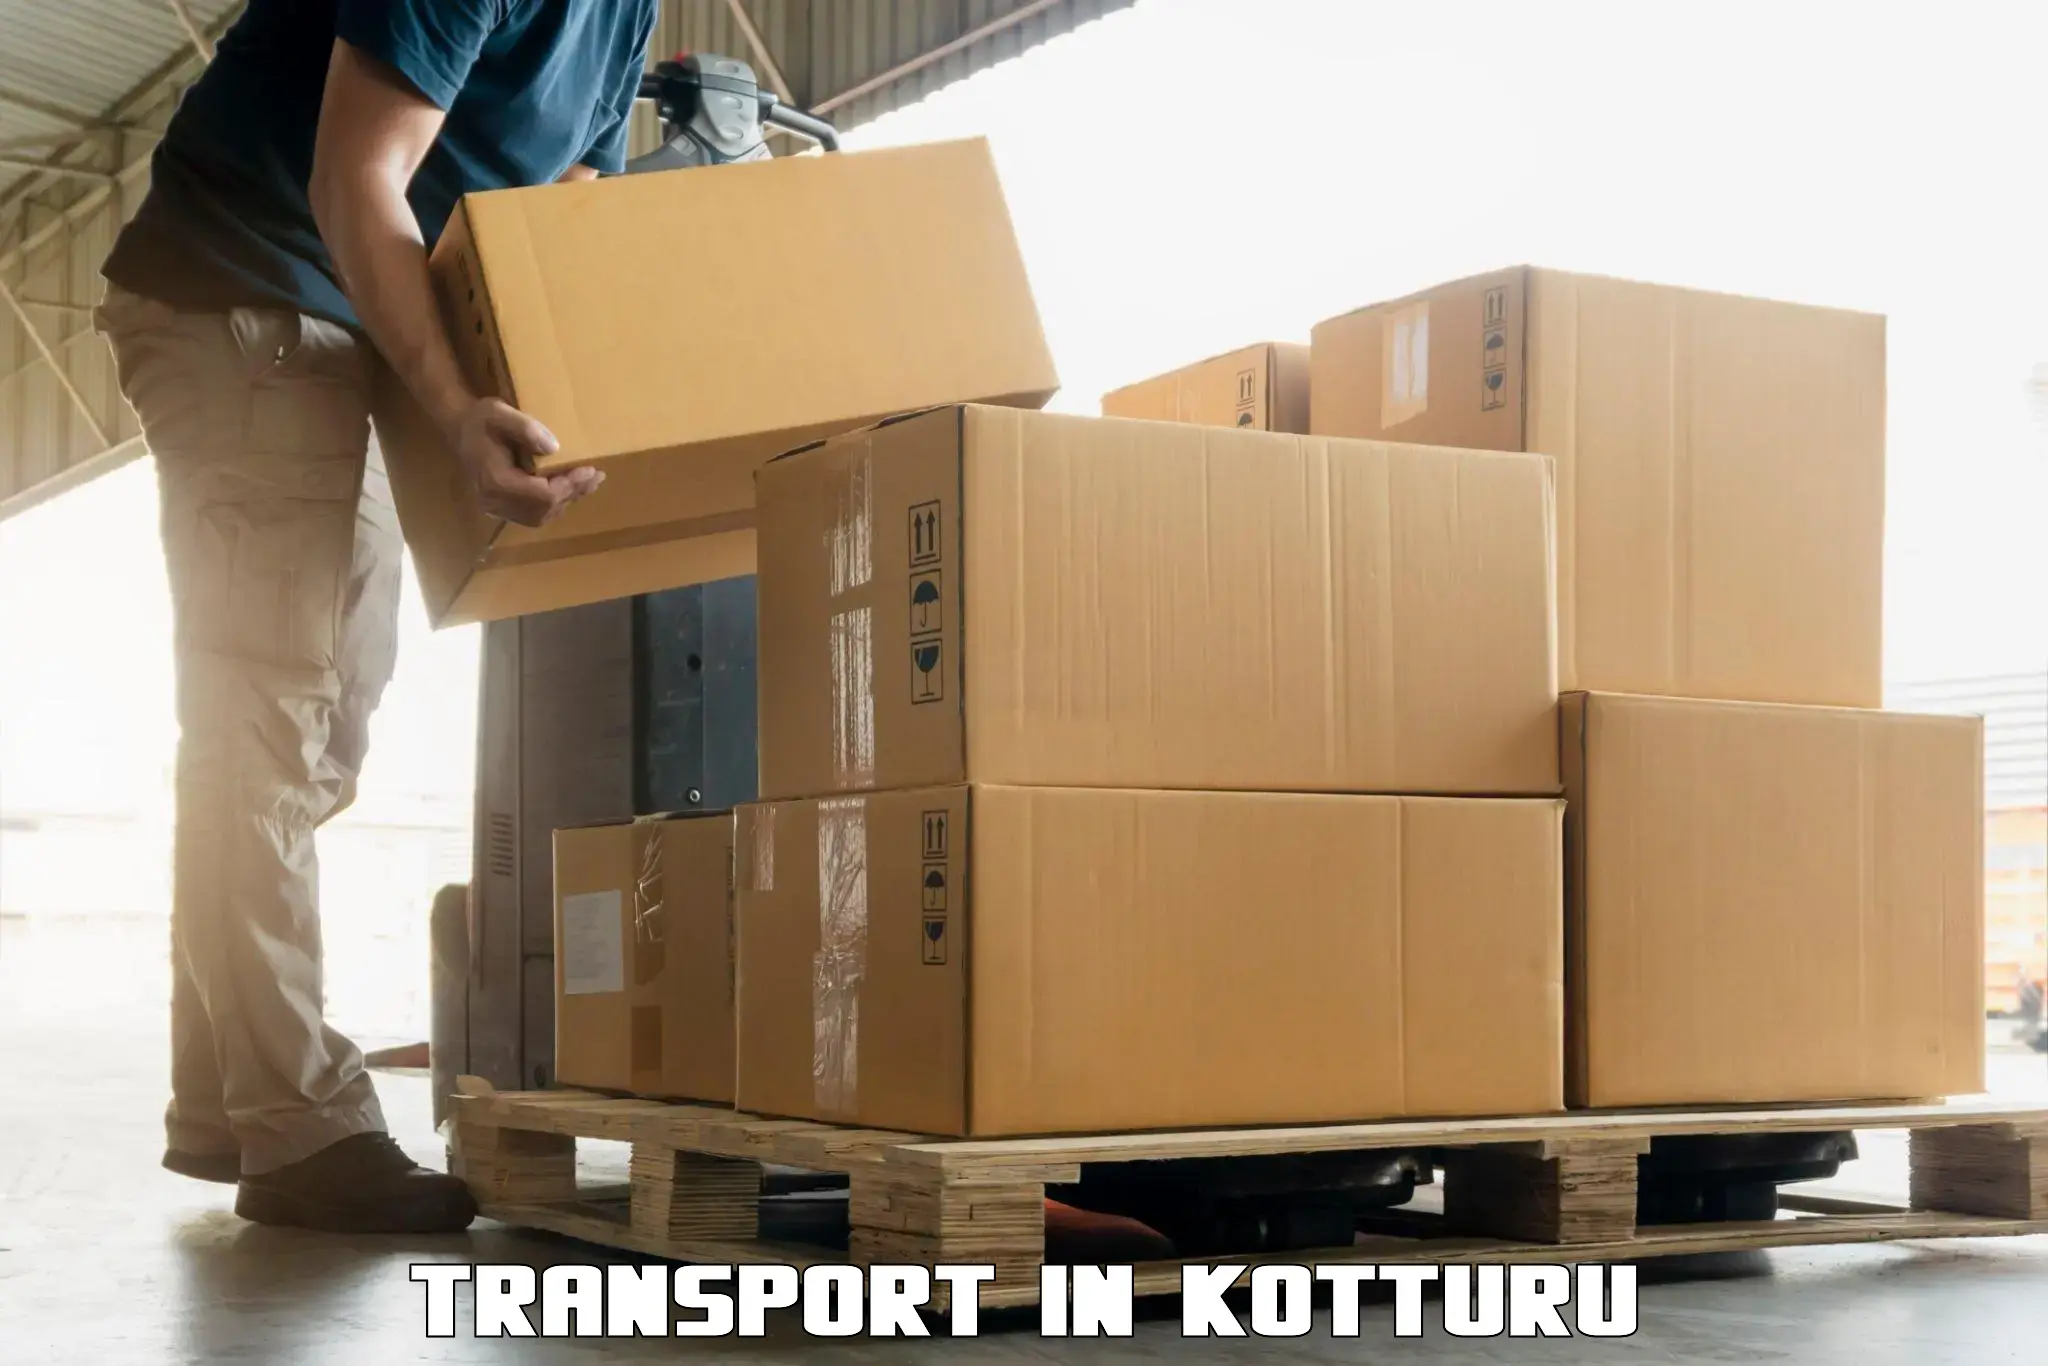 Commercial transport service in Kotturu